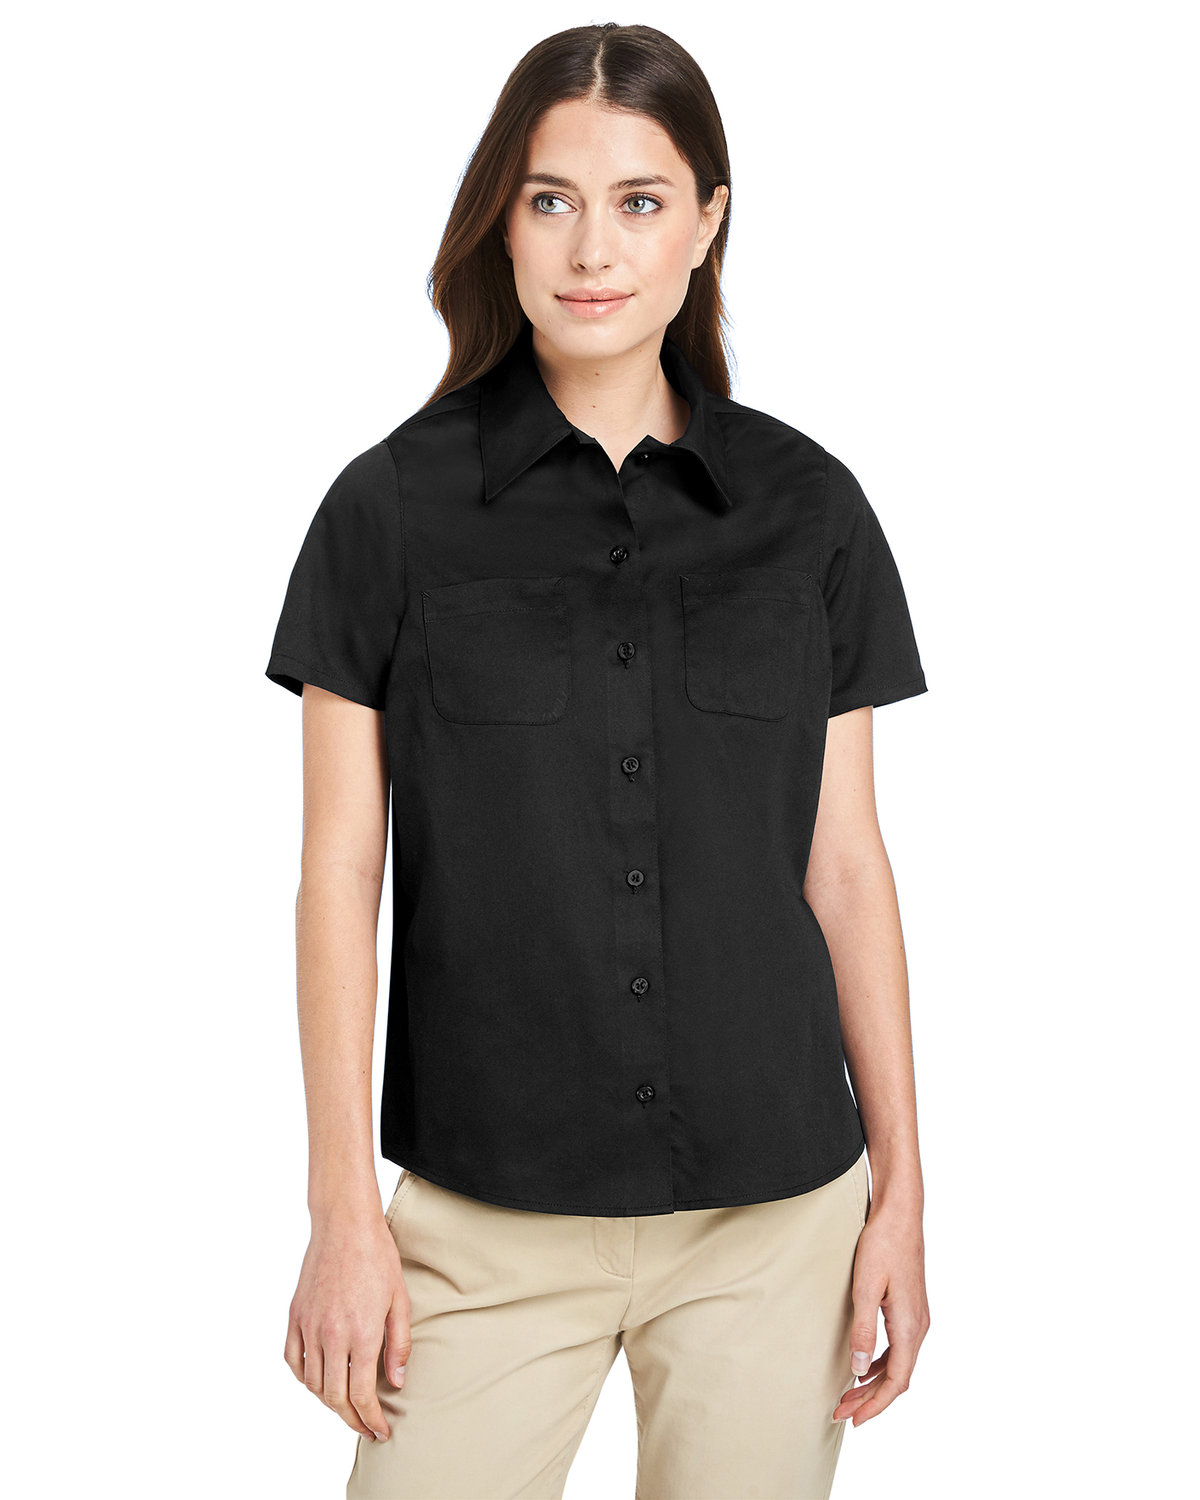 Ladies' Advantage IL Short-Sleeve Work Shirt - M585W